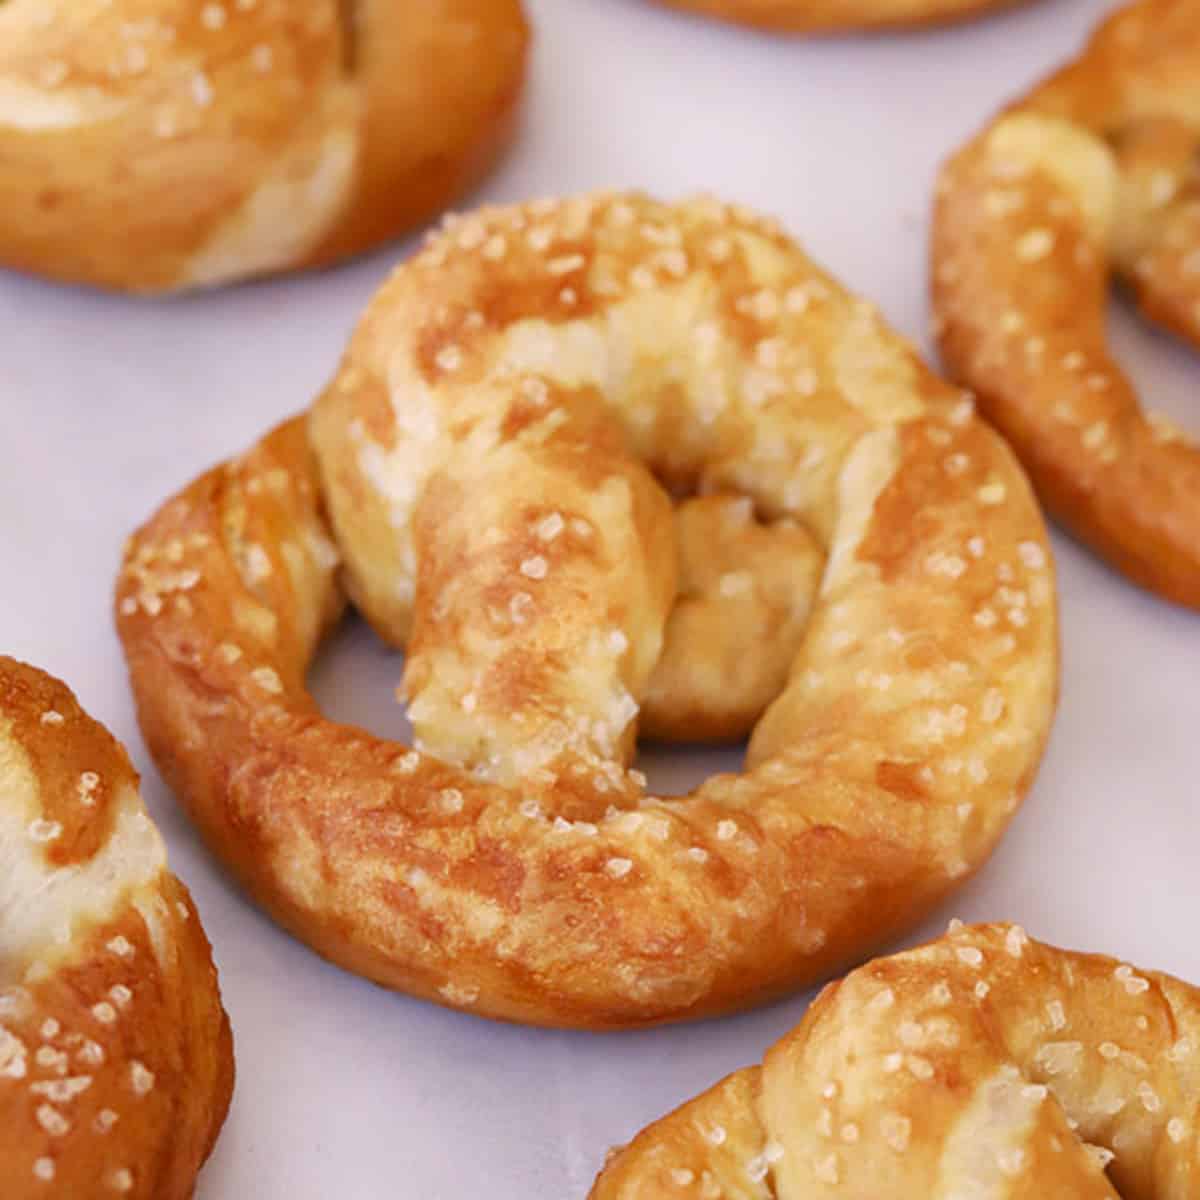 The best salted pretzels on parchment paper